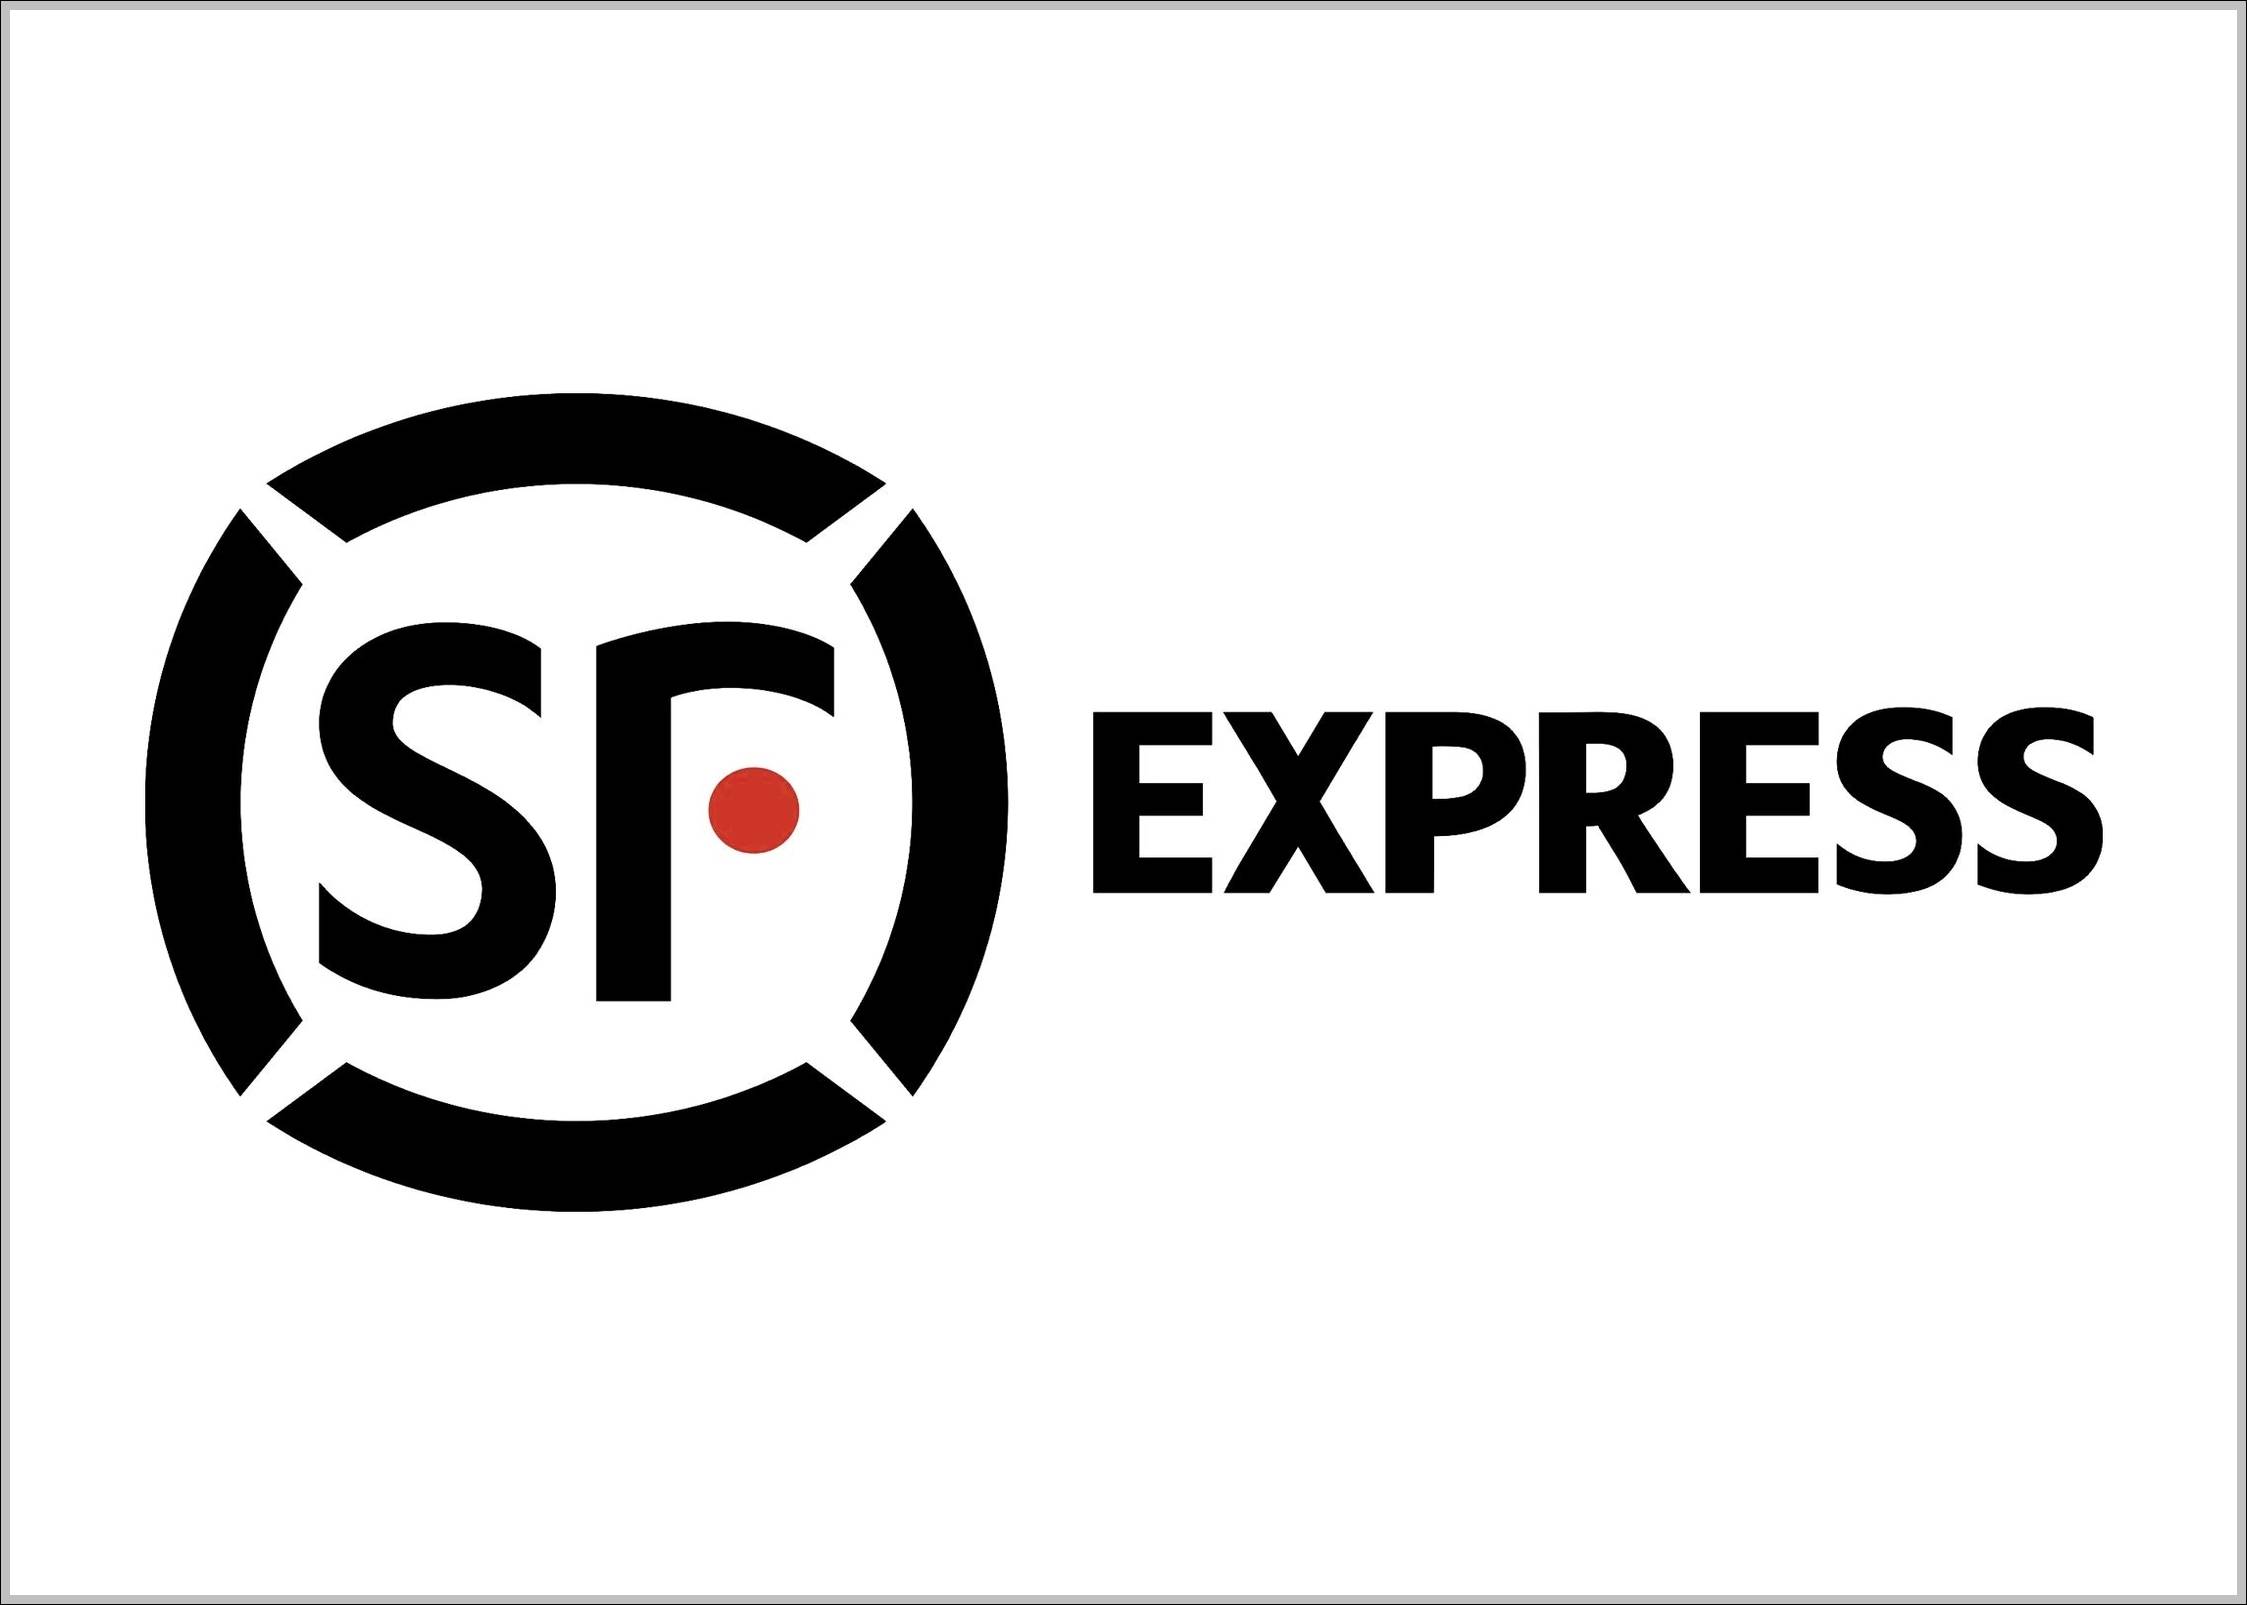 SF Express sign